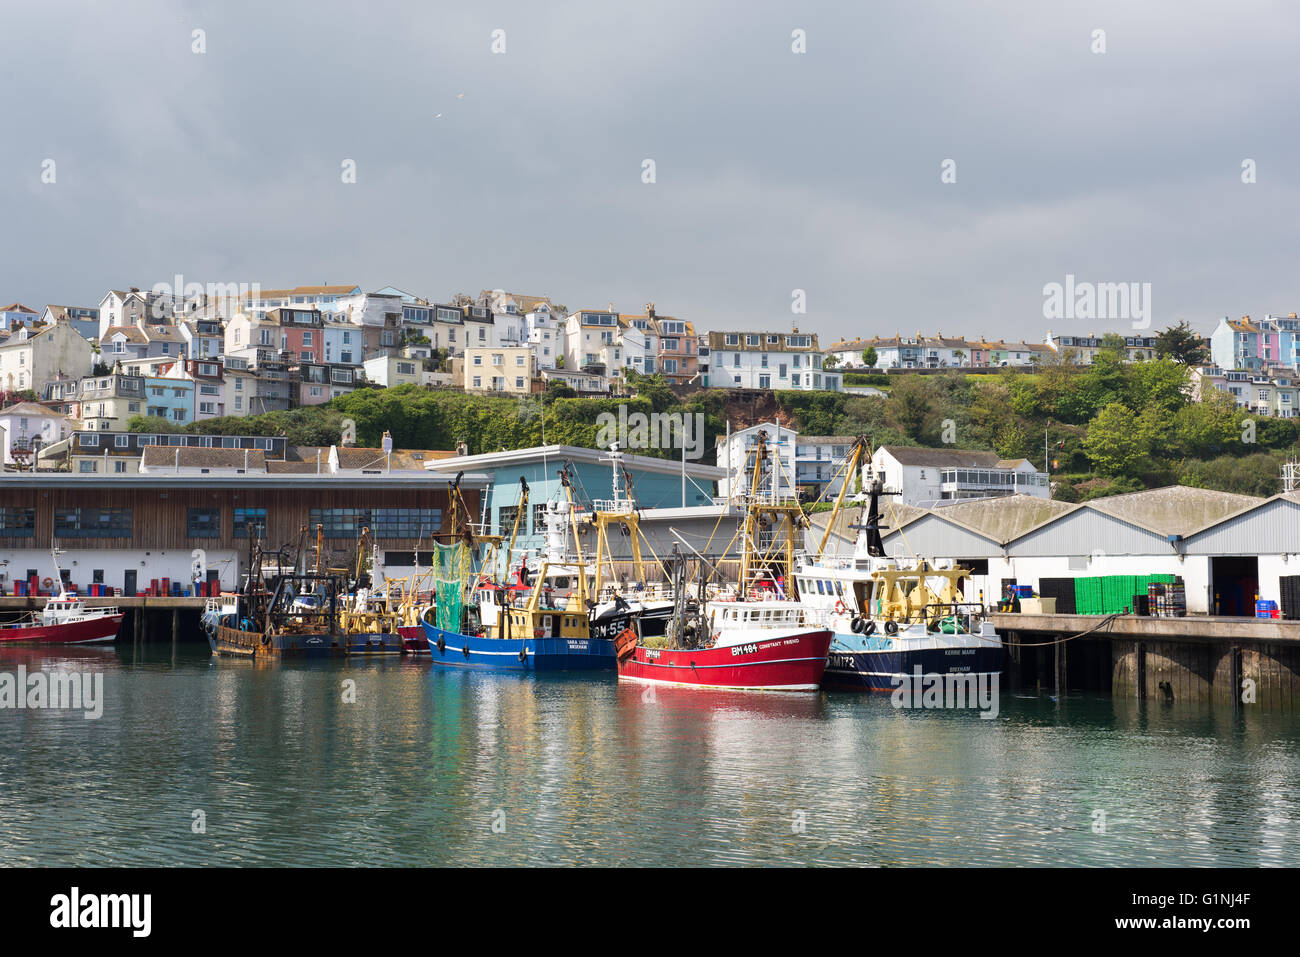 Fishing boats and trawlers at habour side, Brixham, Devon, UK. Stock Photo